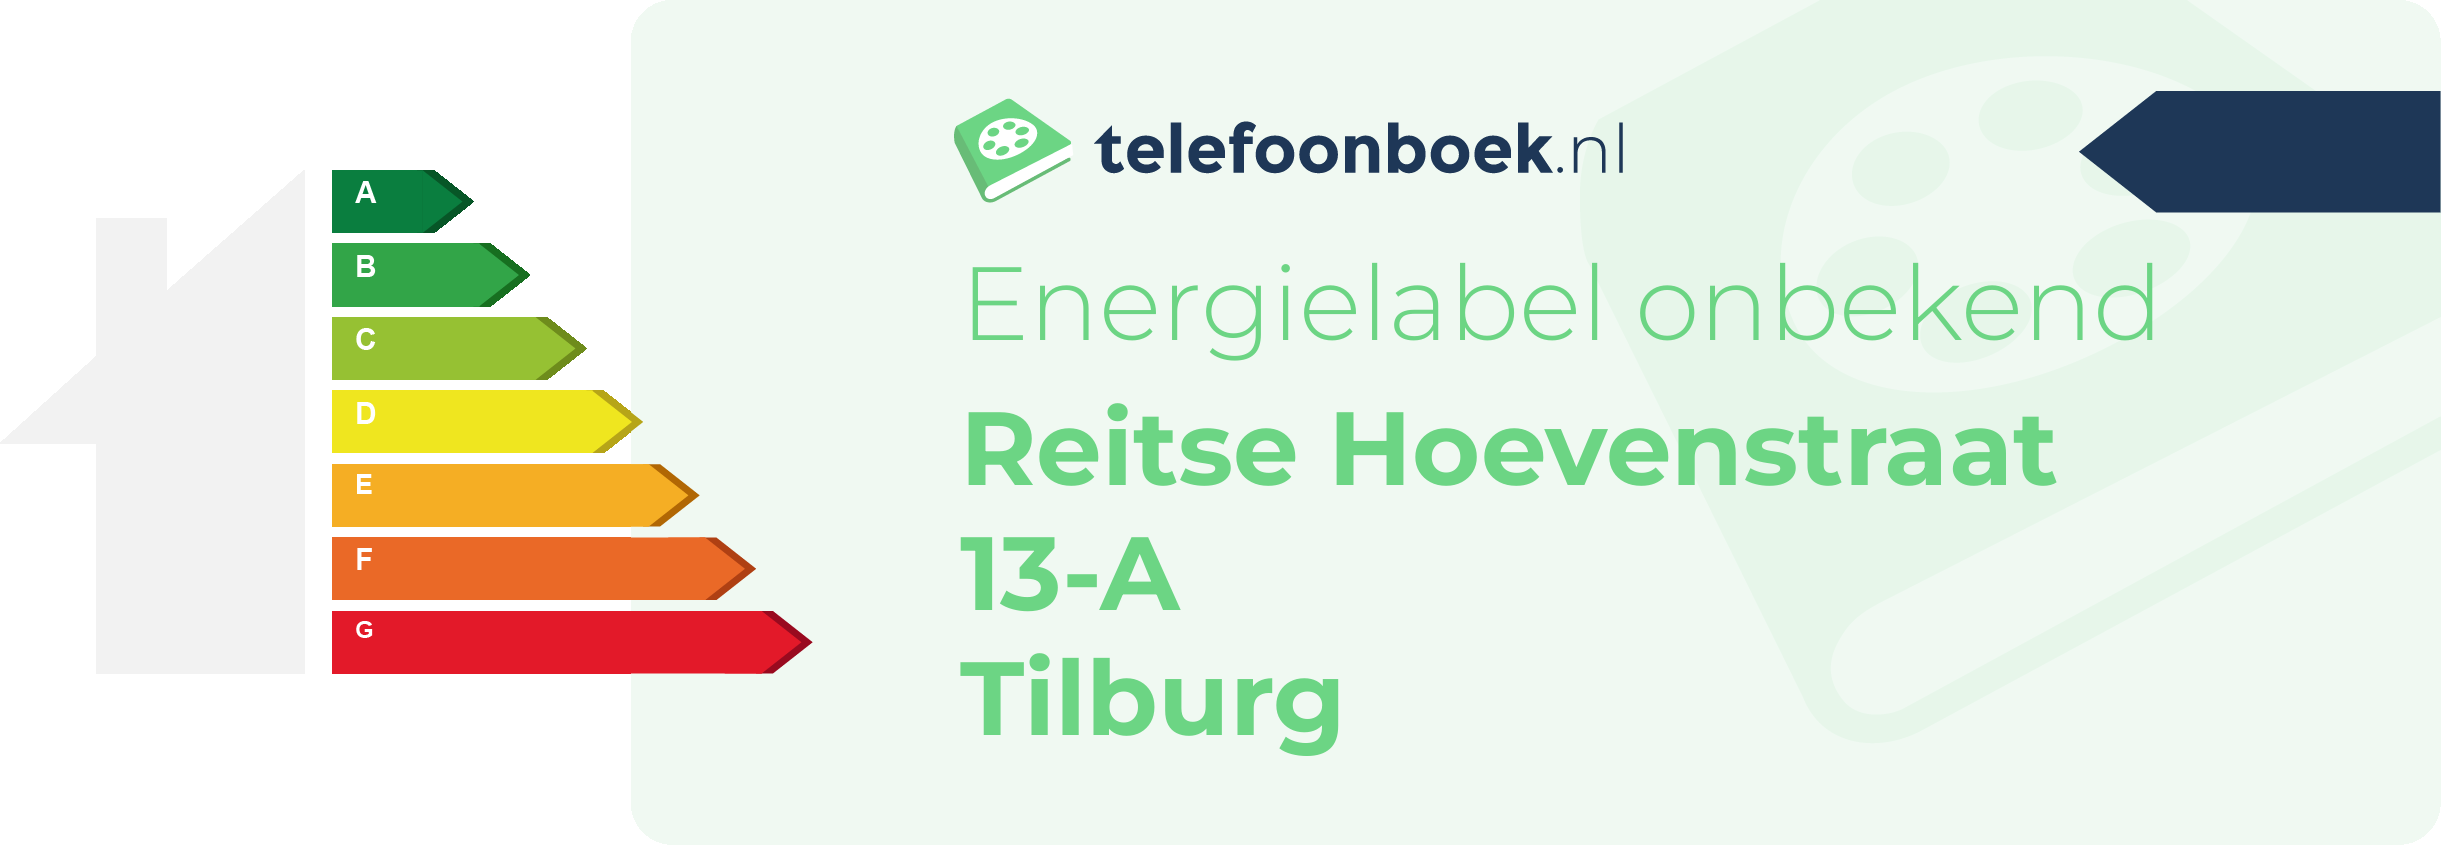 Energielabel Reitse Hoevenstraat 13-A Tilburg